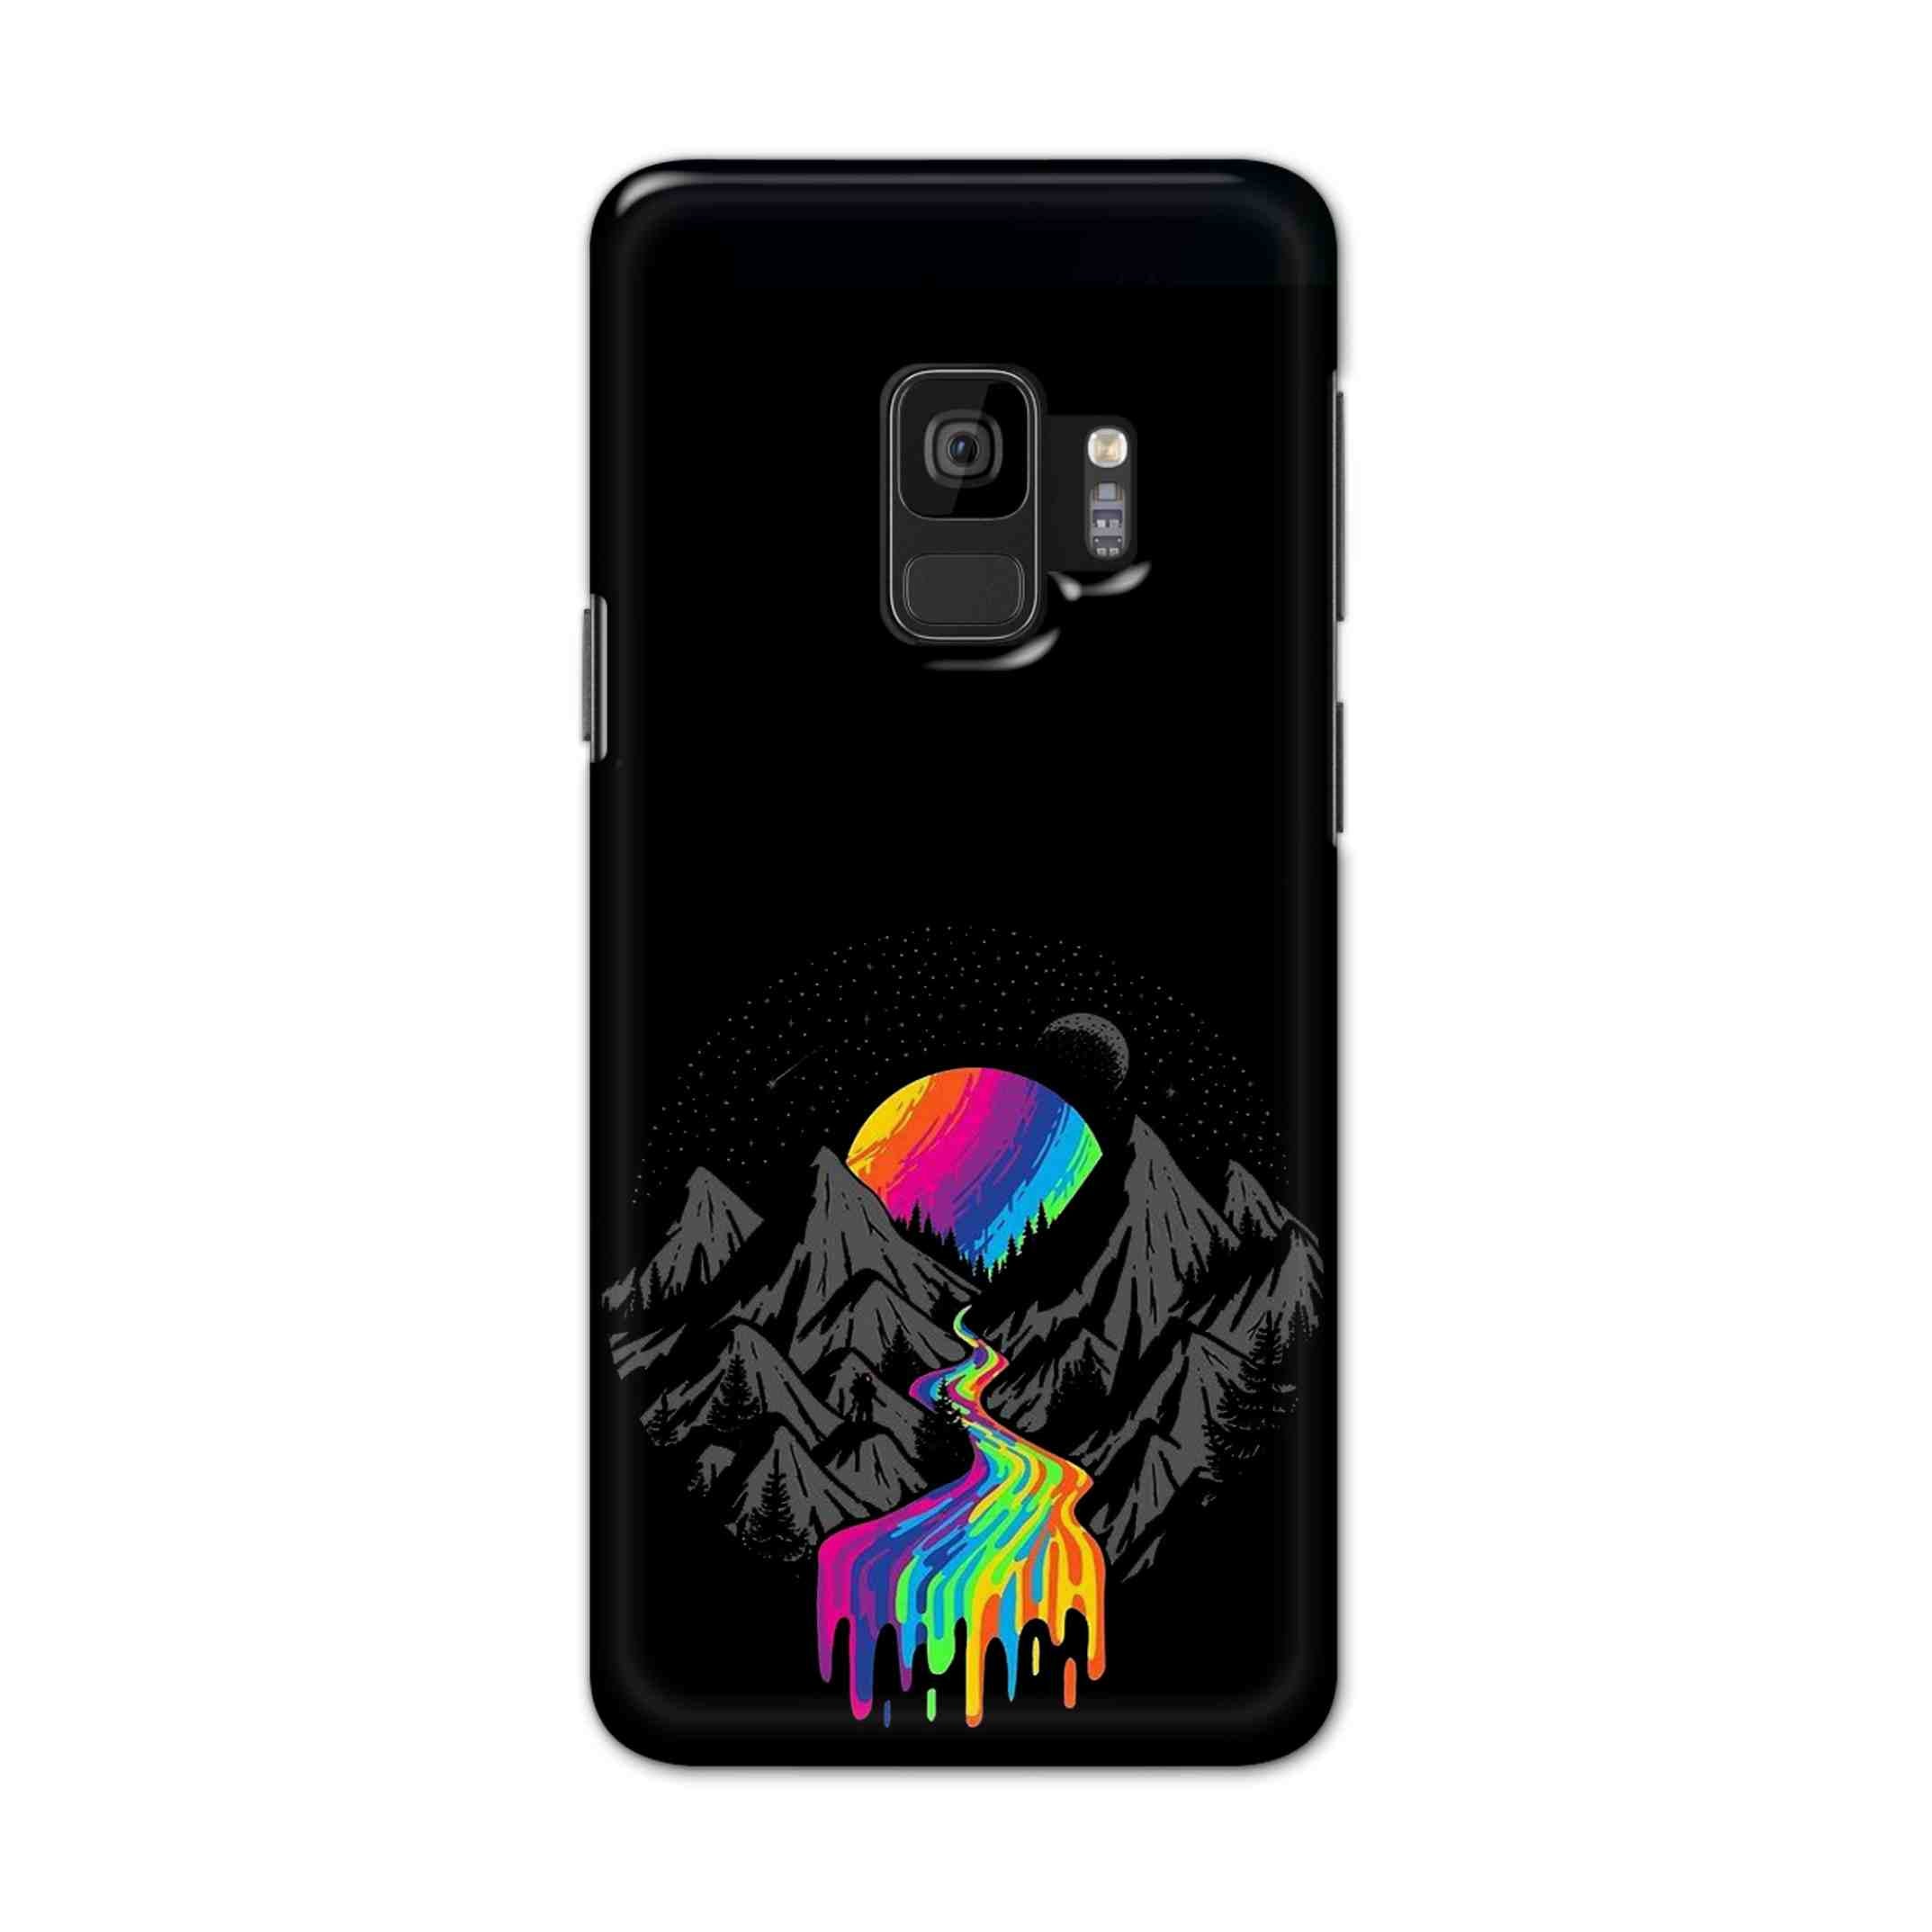 Buy Neon Mount Hard Back Mobile Phone Case Cover For Samsung S9 Online